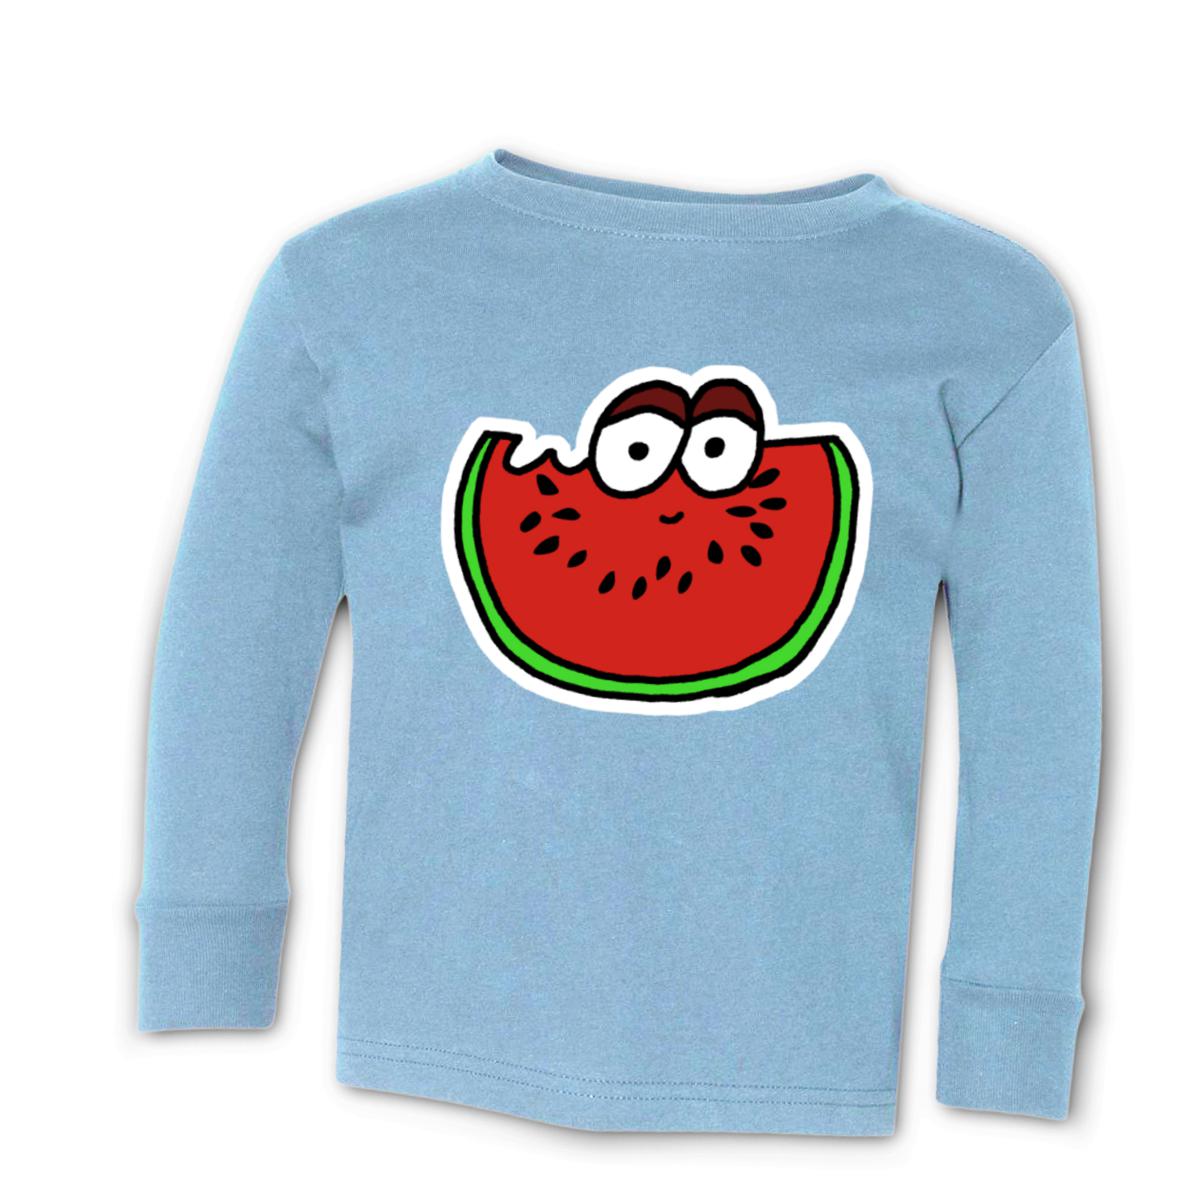 Watermelon Toddler Long Sleeve Tee 56T light-blue